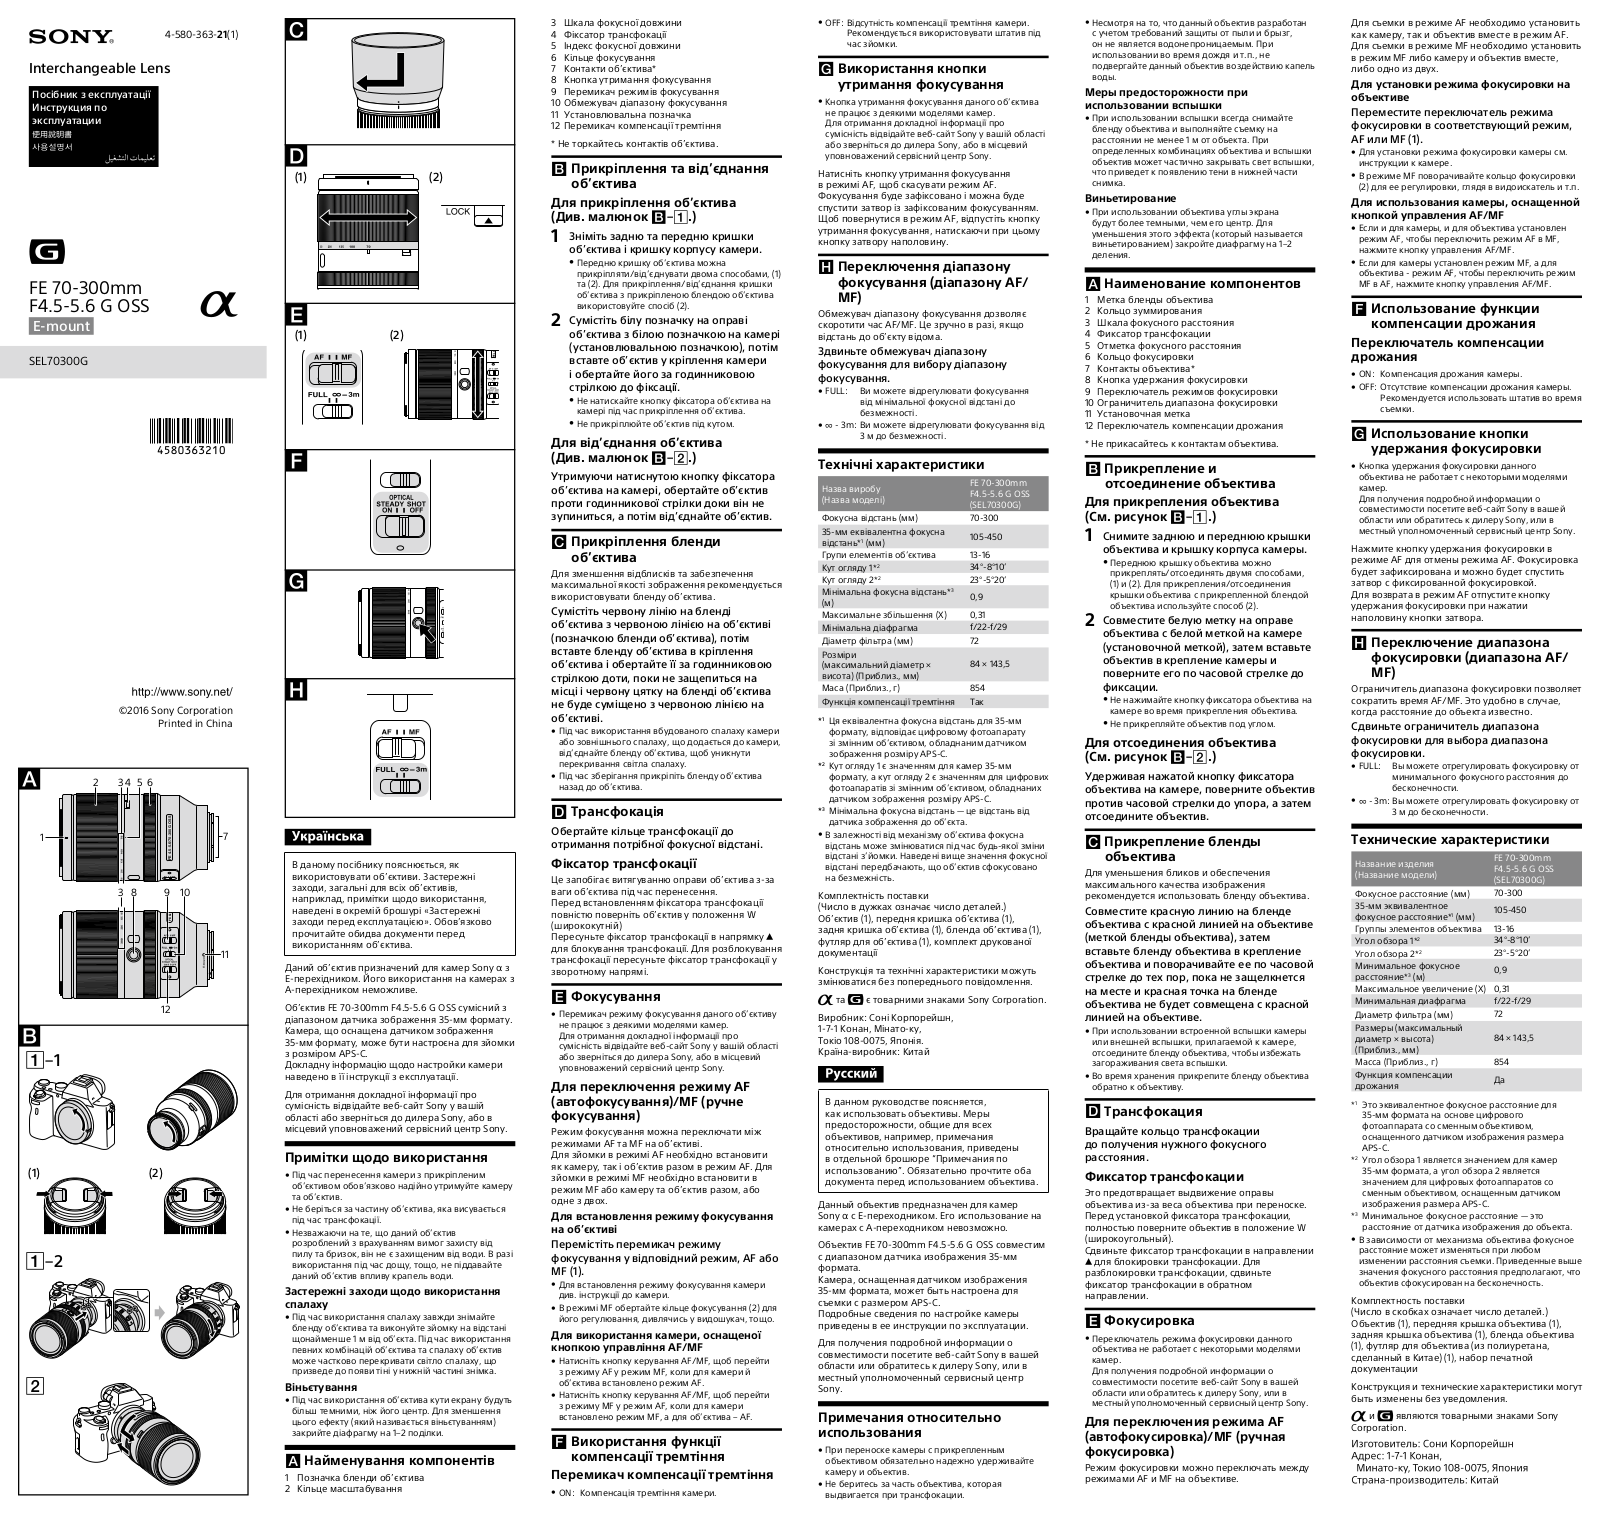 Sony SEL70300G User Manual